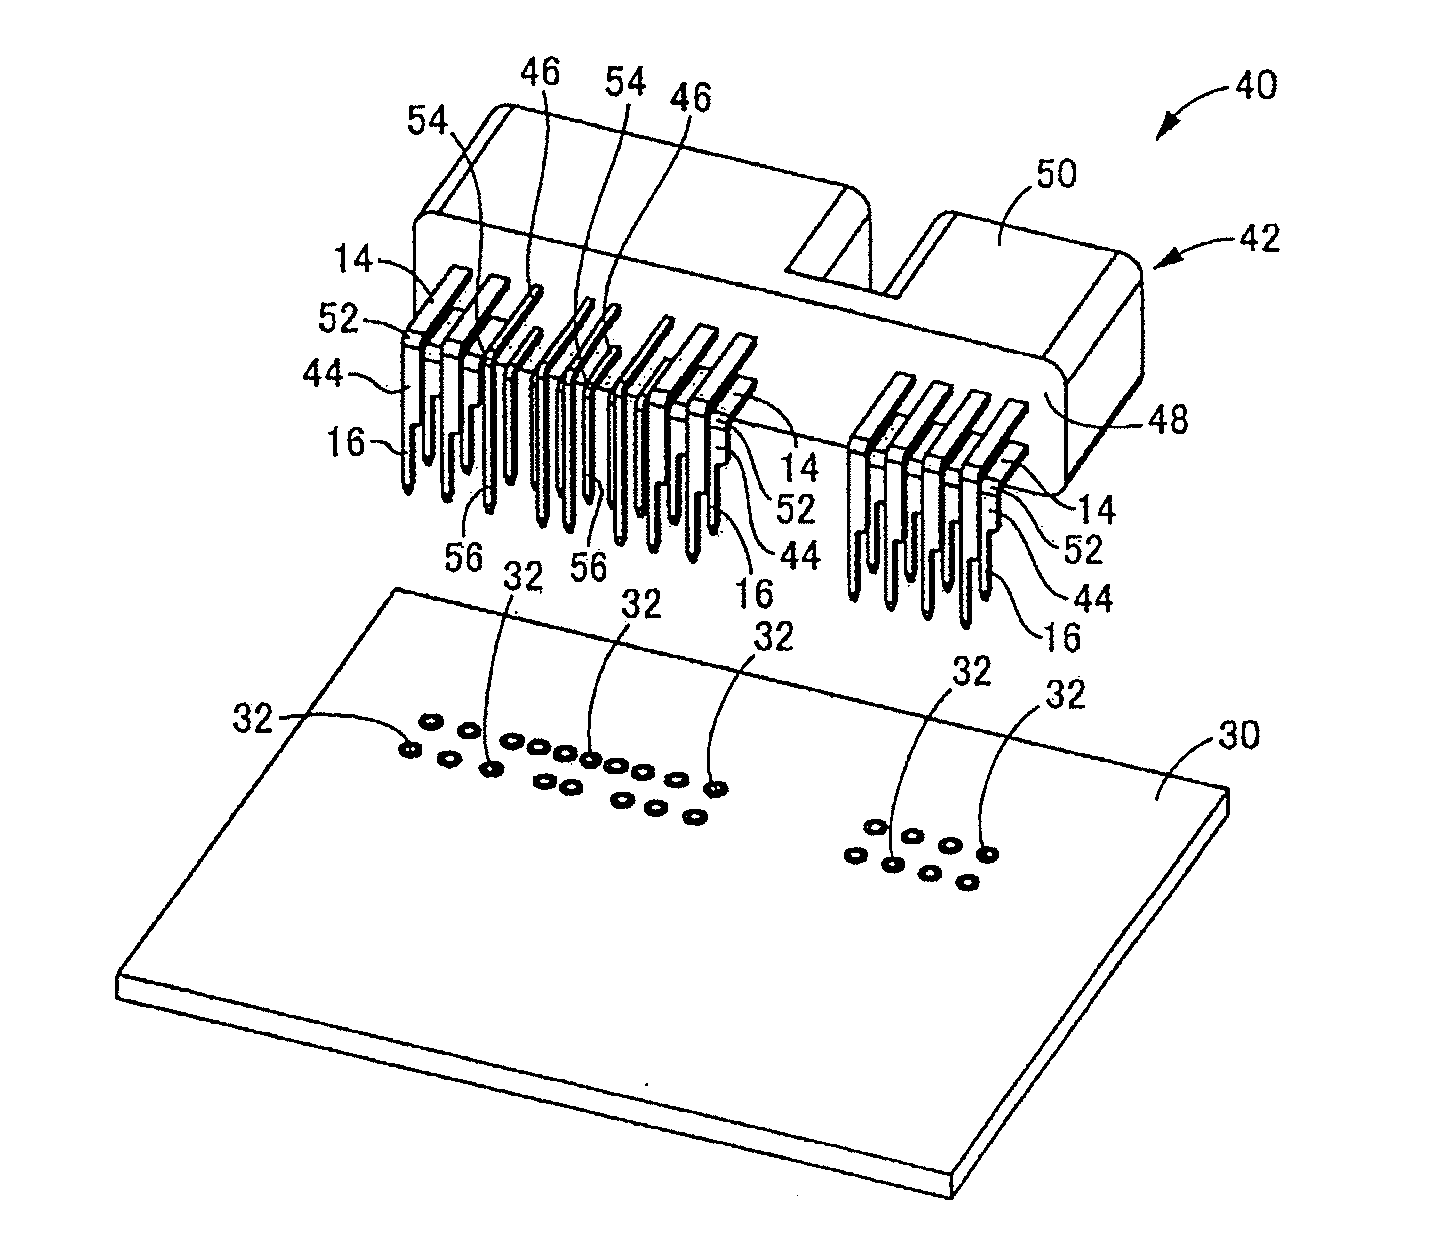 Printed circuit board terminal and printed circuit board connector having the same